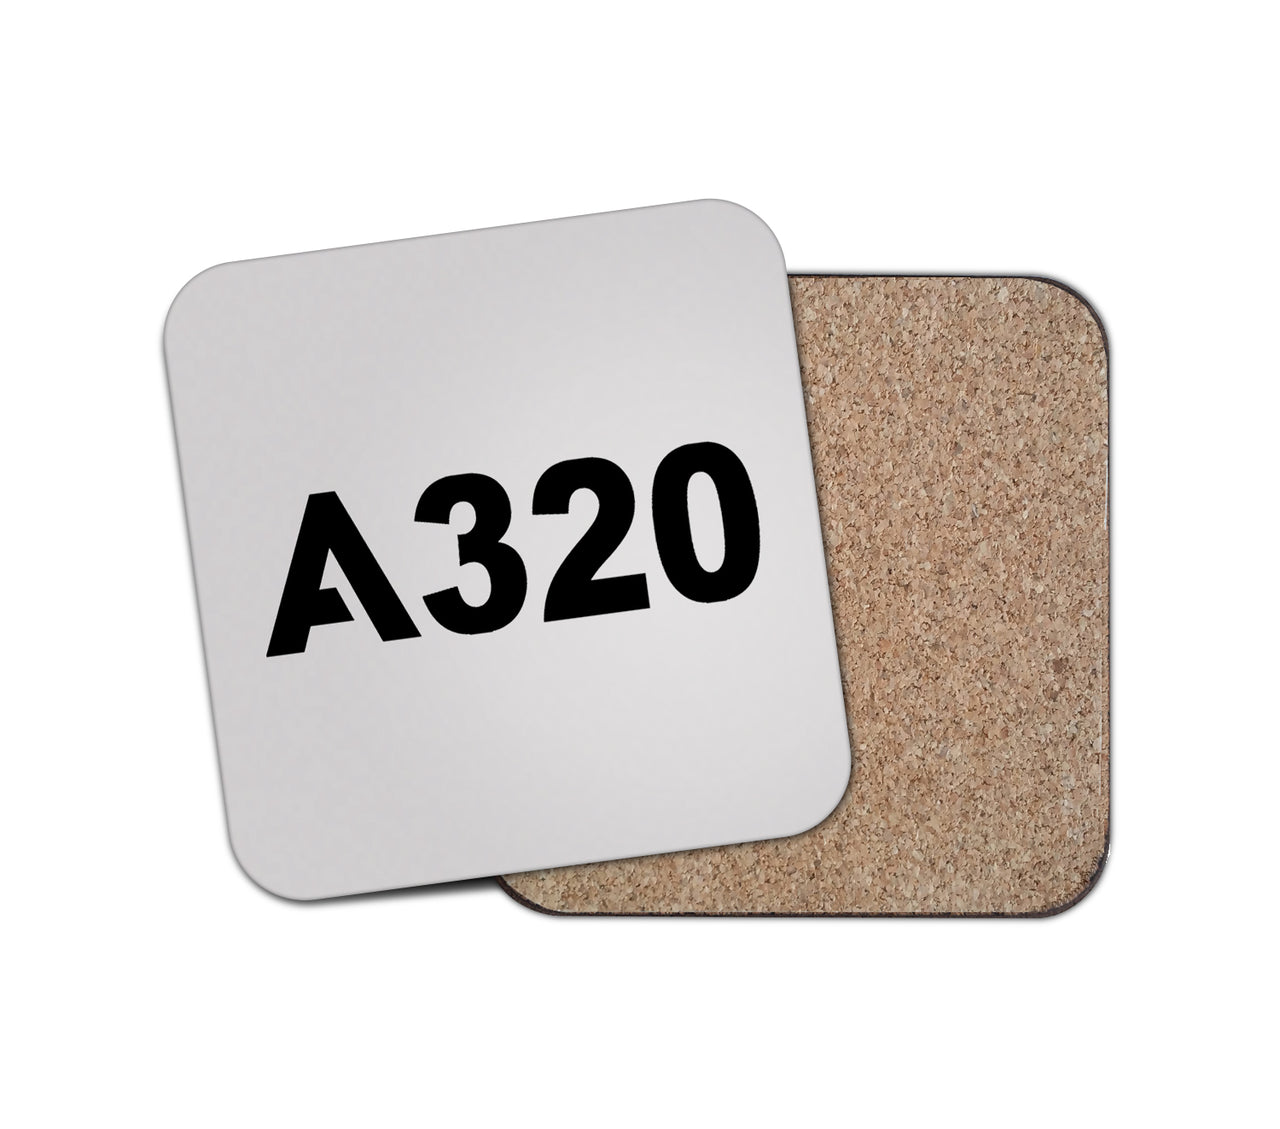 A320 Flat Text Designed Coasters